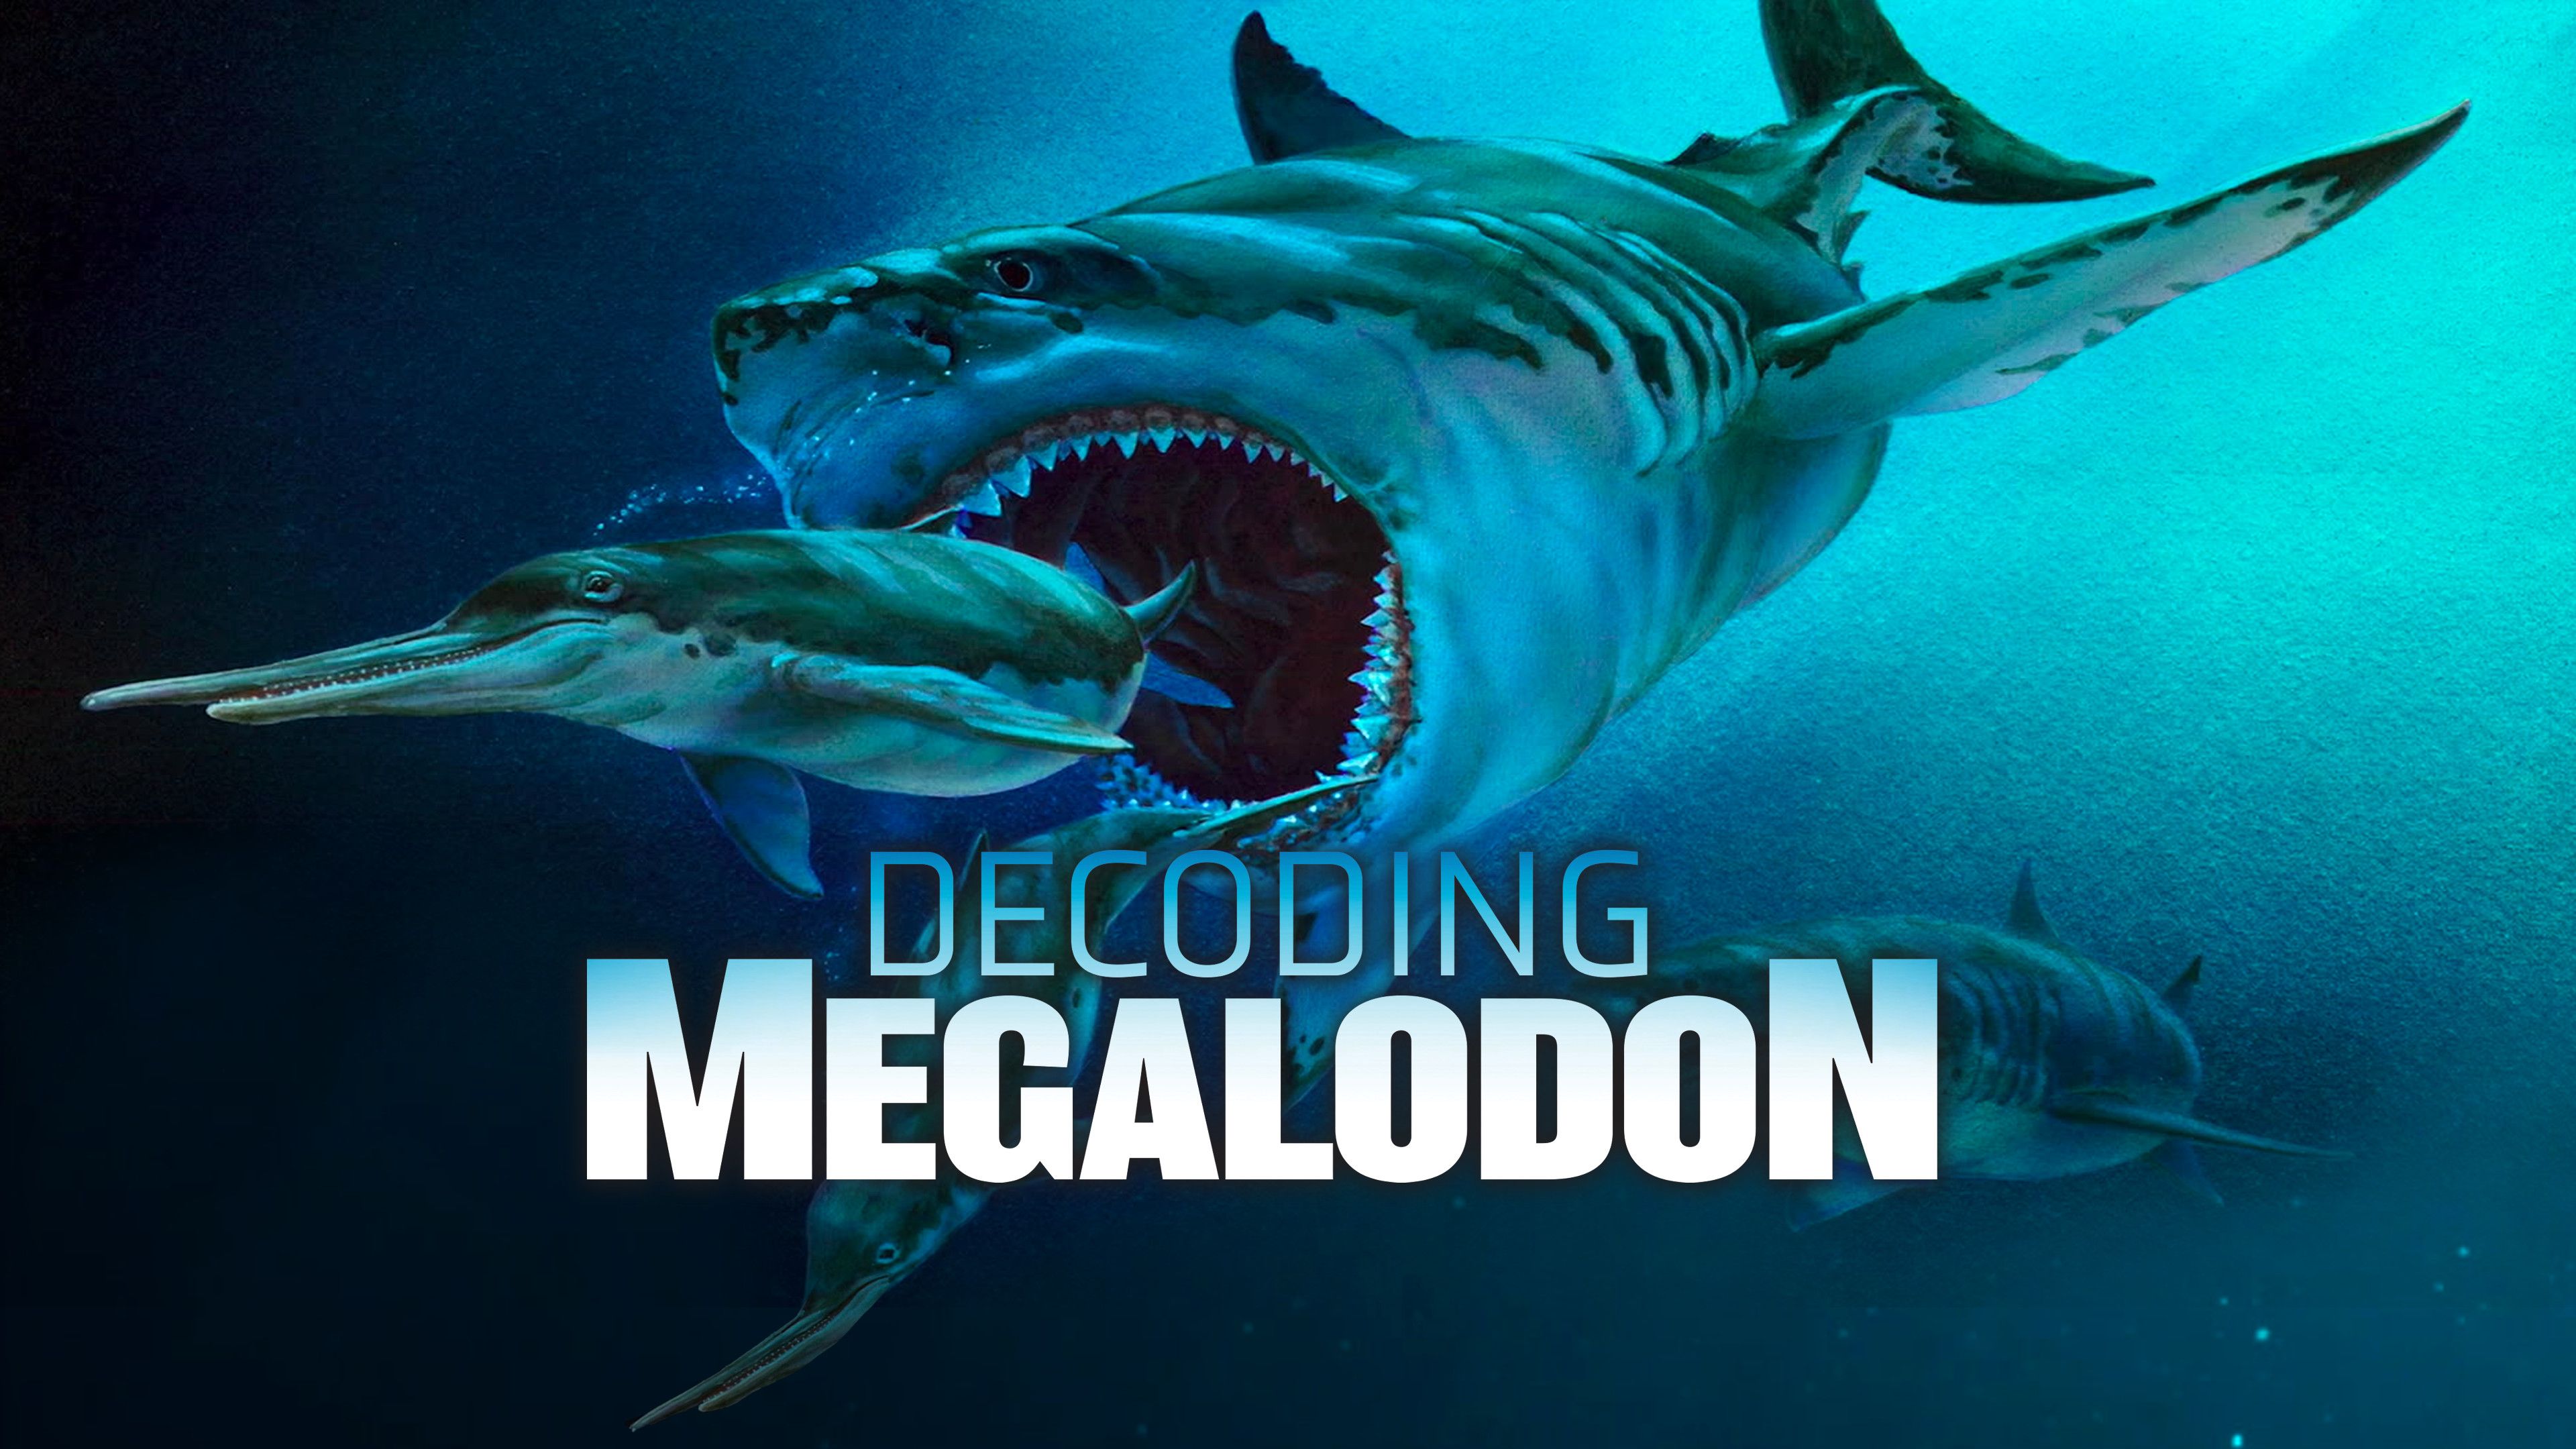 Decoding Megalodon